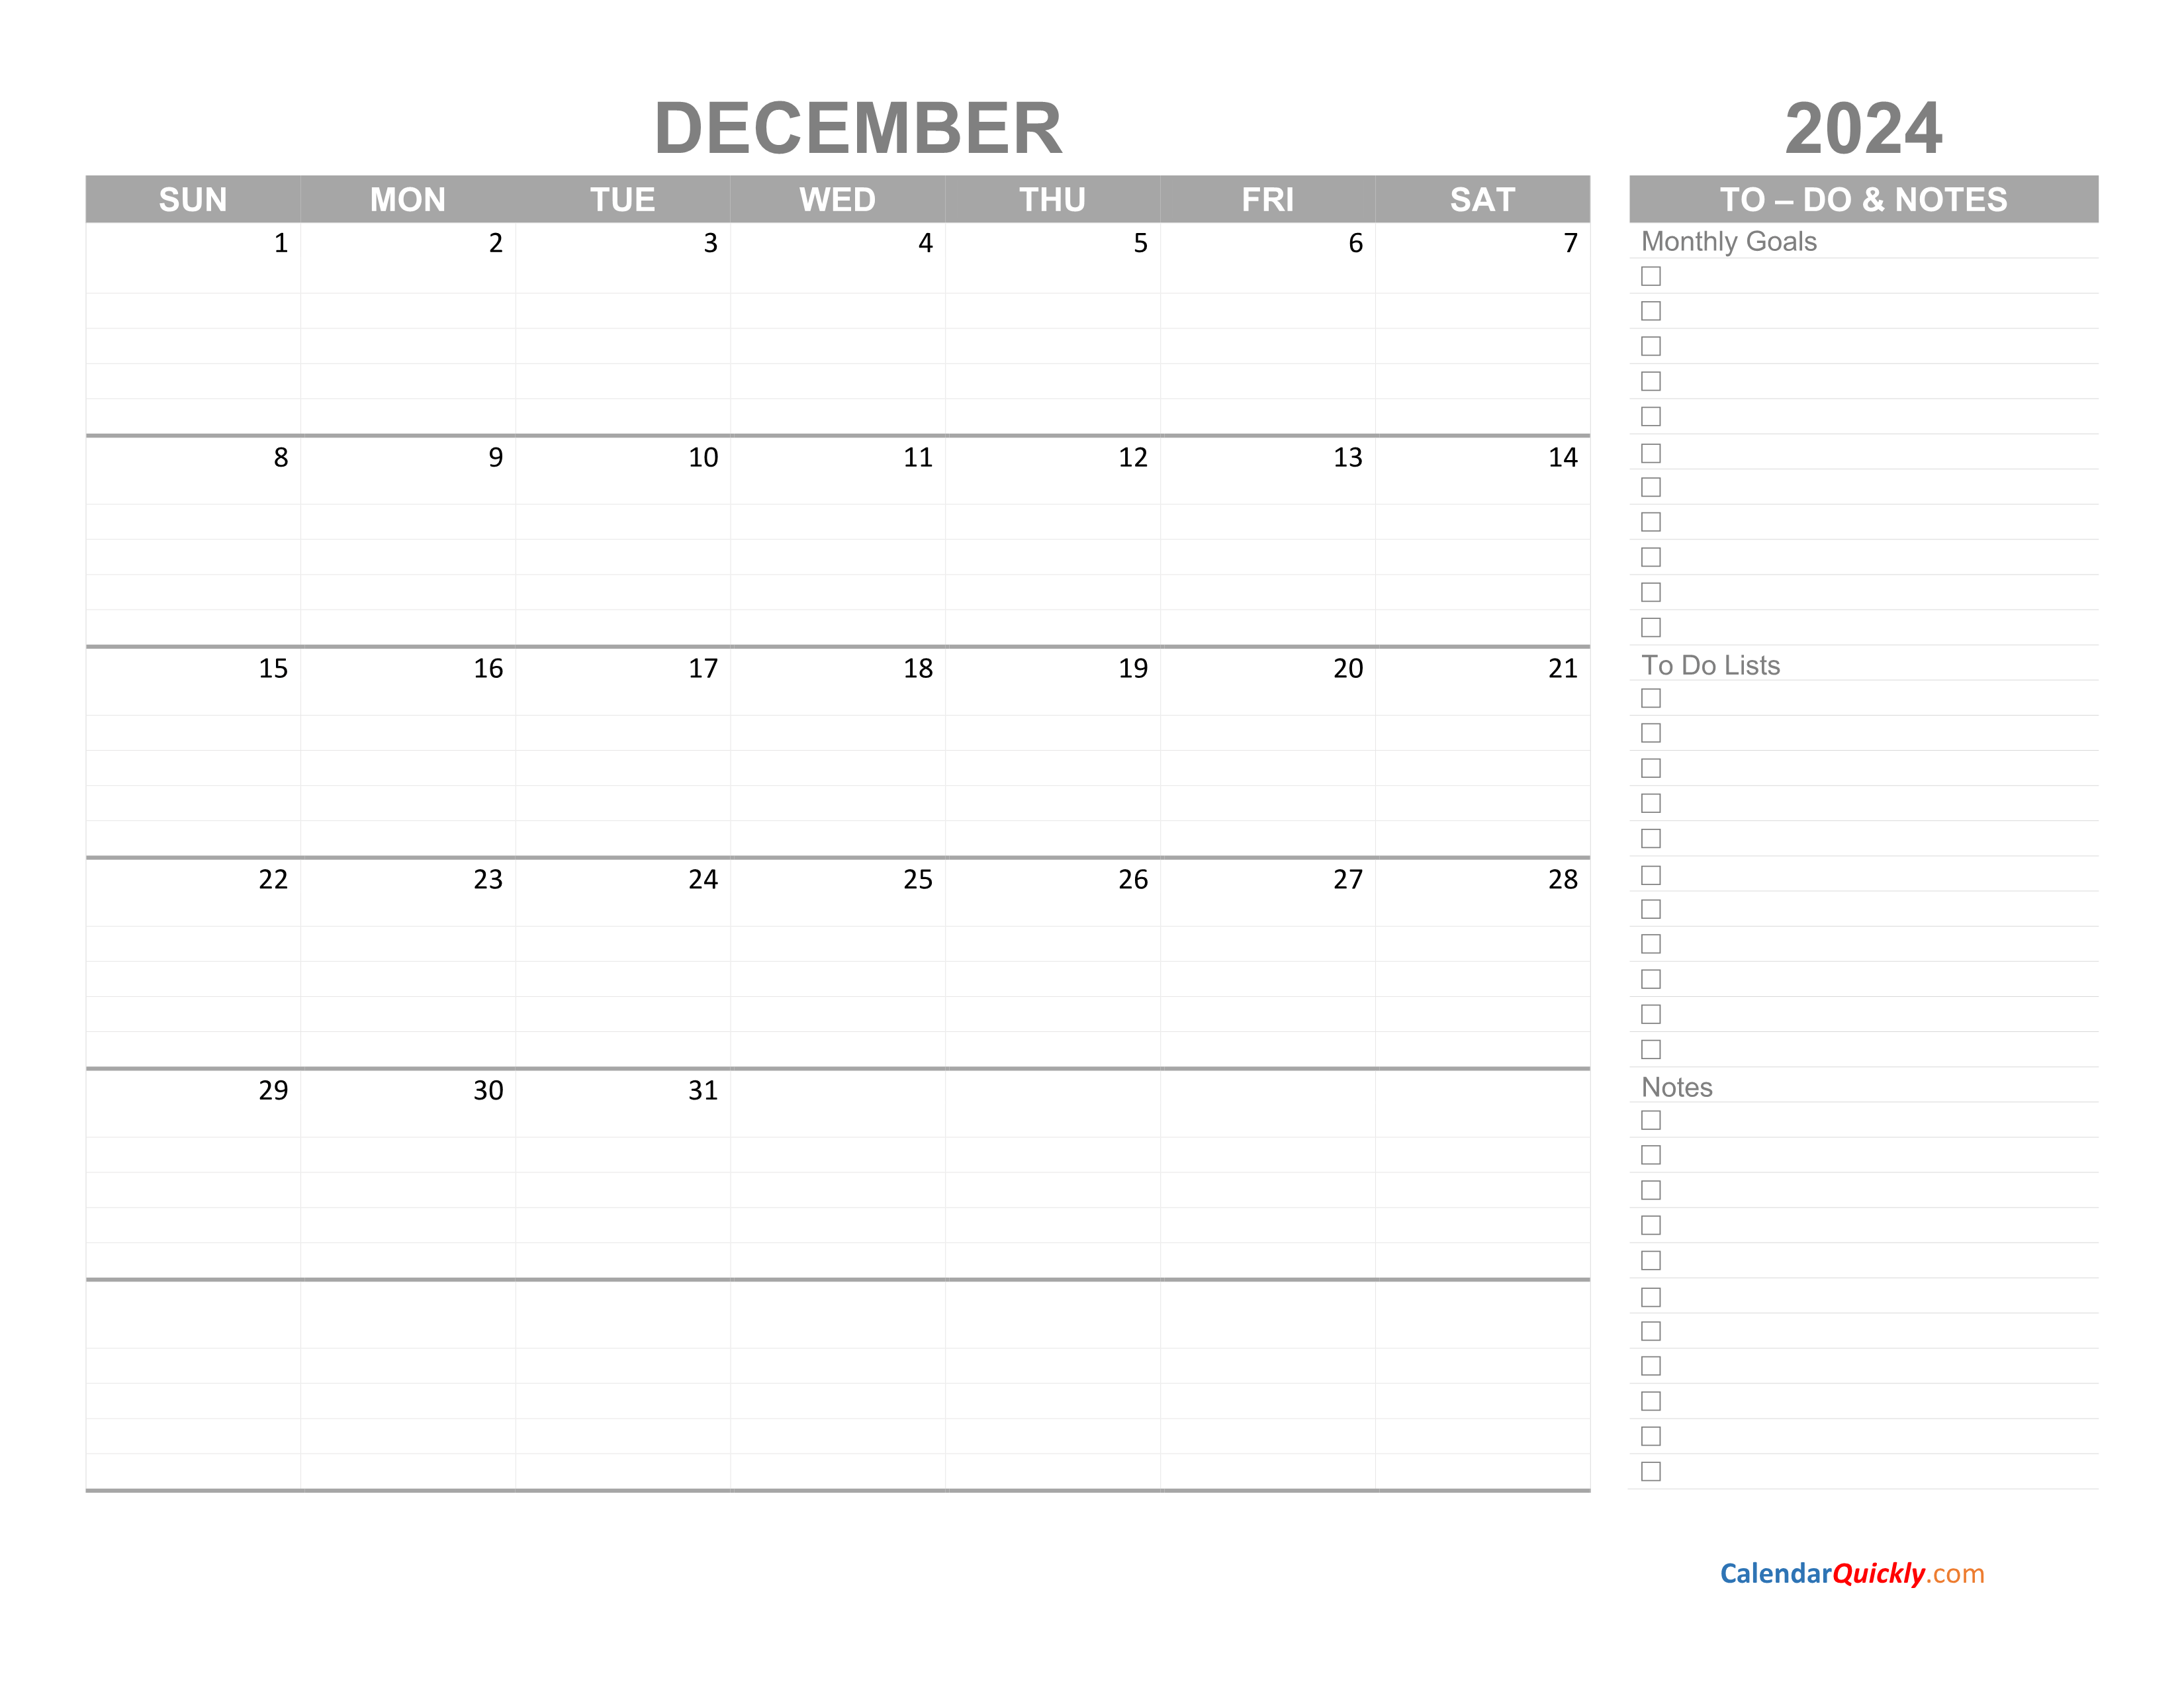 December 2024 Calendar with ToDo List Calendar Quickly